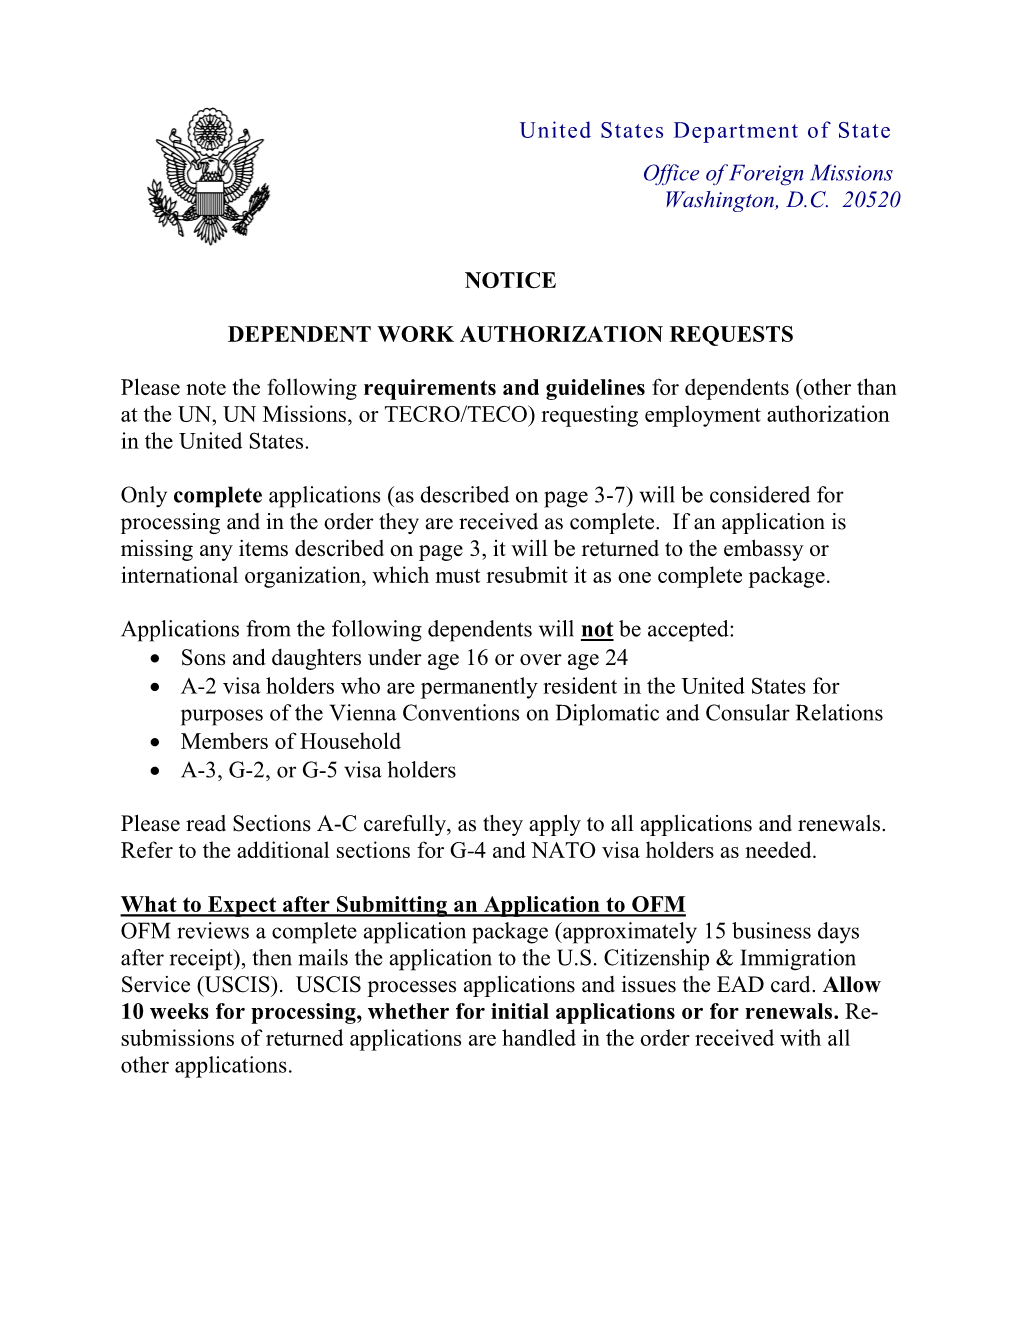 OFM Notice – Dependent Work Authorization